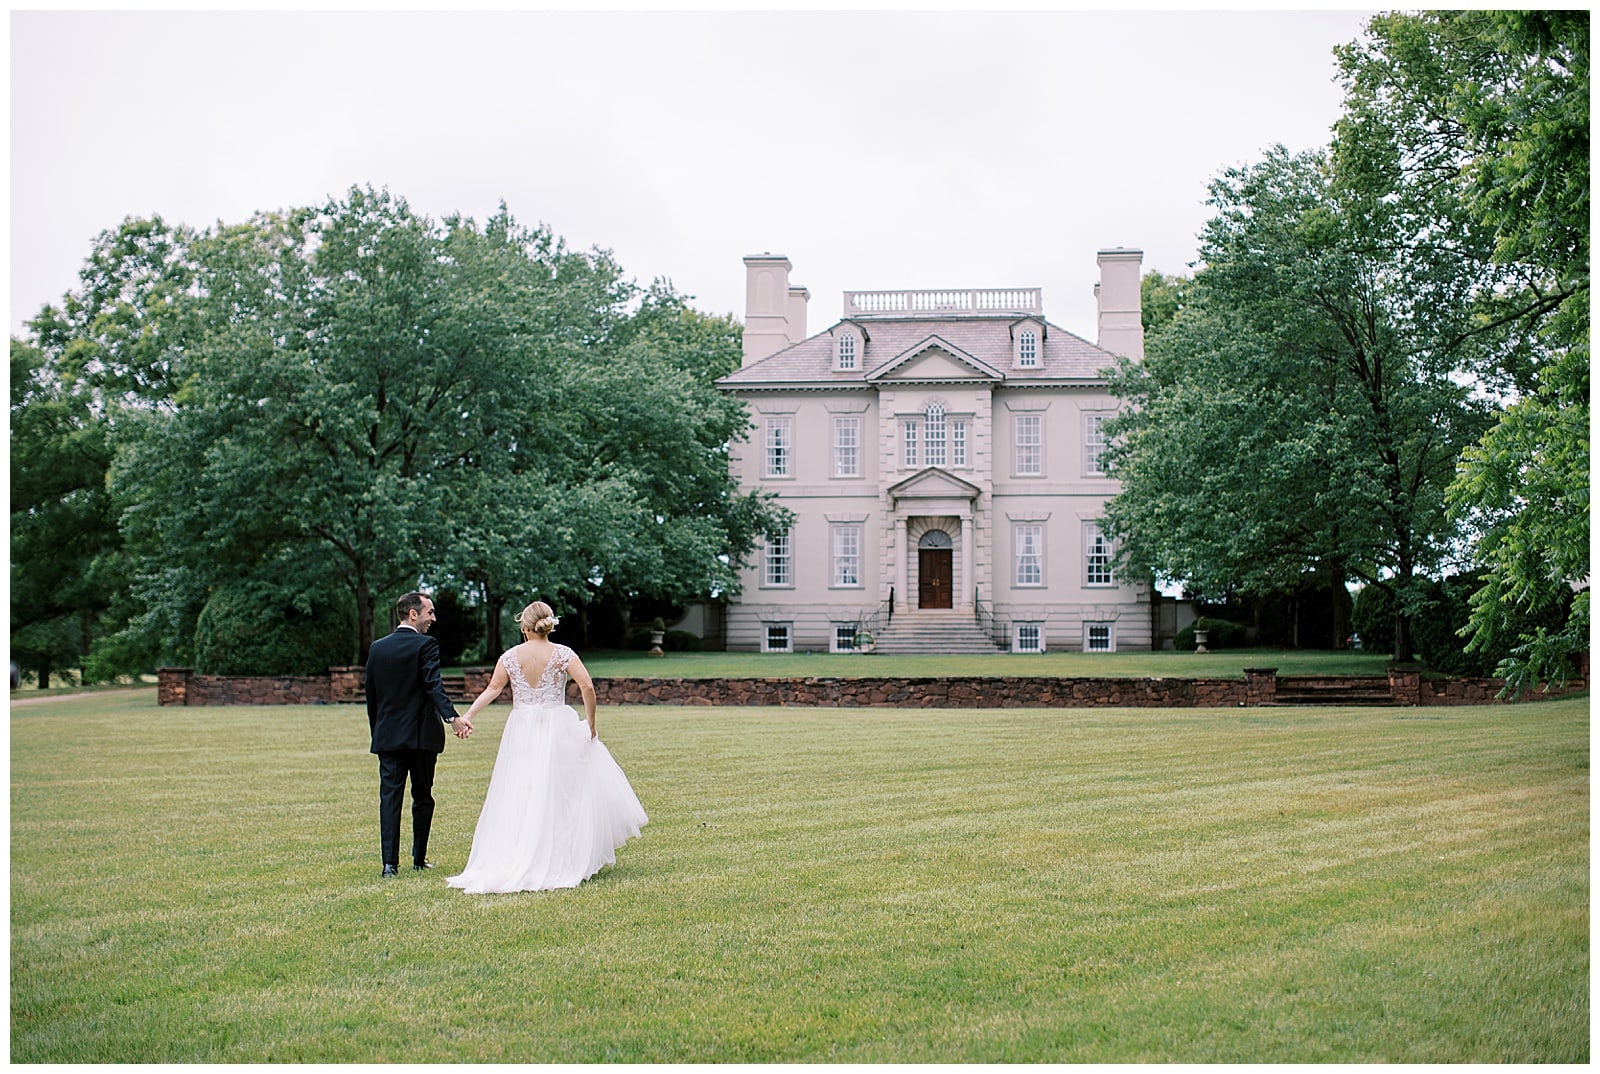 Danielle-Defayette-Photography-Great-Marsh-Estate-Wedding_0007.jpg